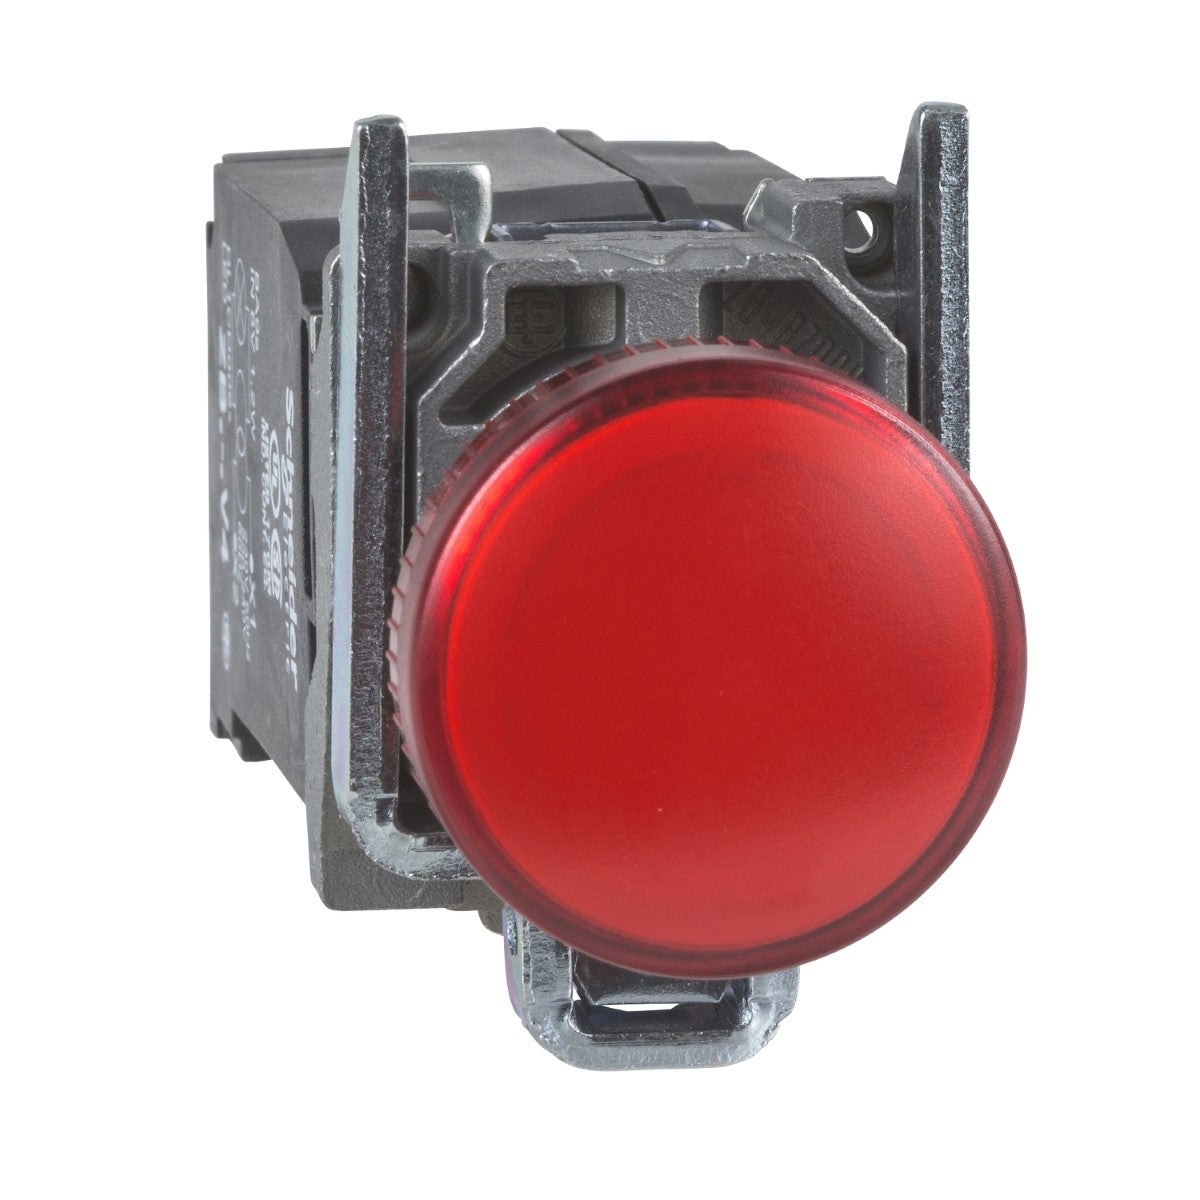 Pilot light, metal, red, Ã˜22, plain lens with integral LED, 230...240 VAC